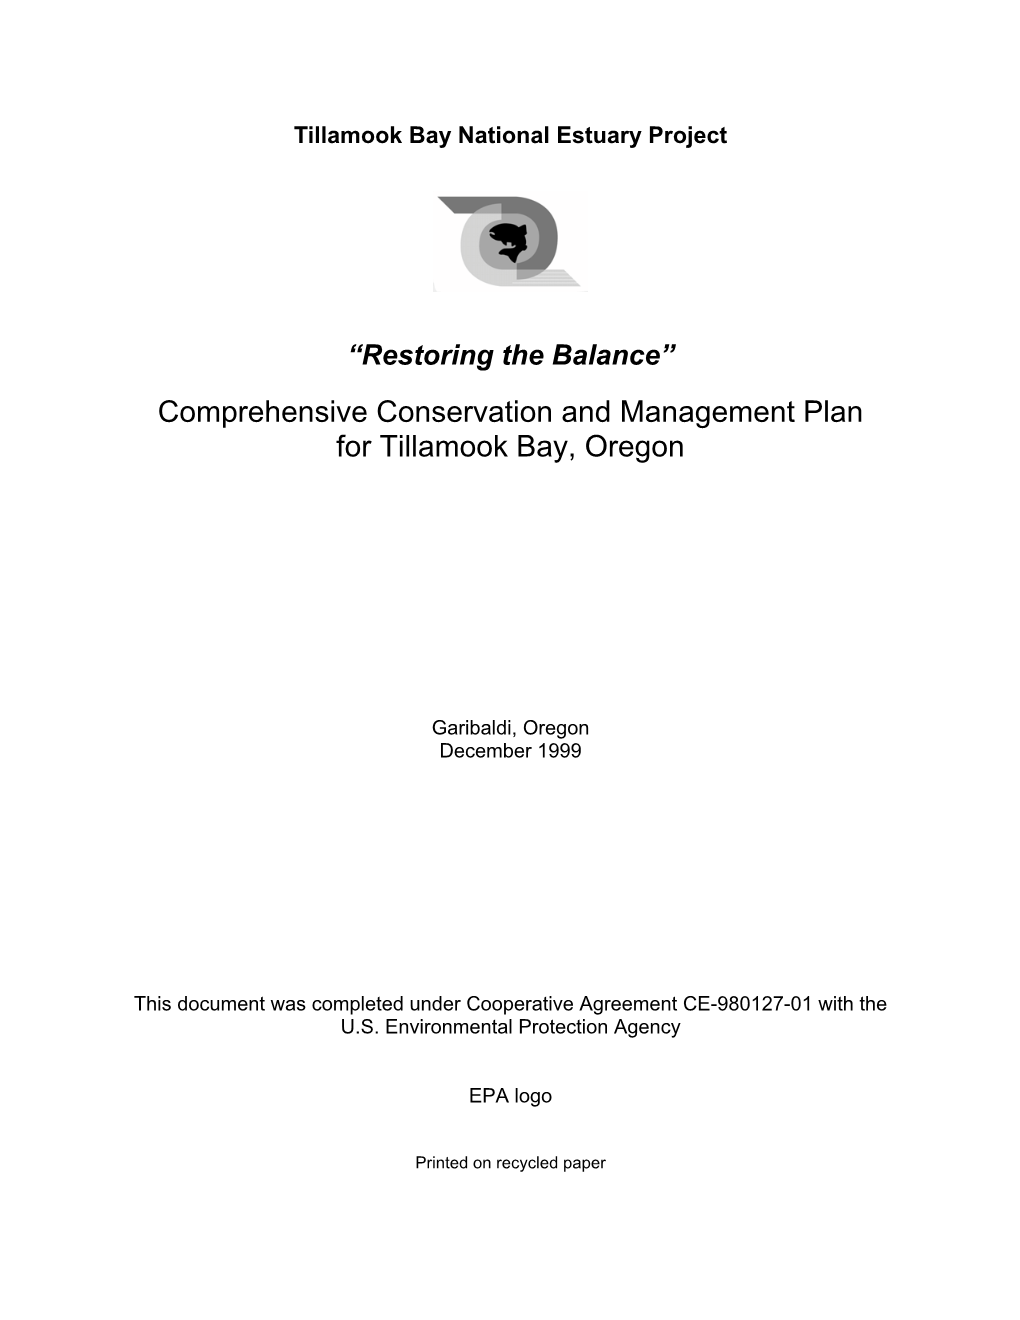 Tillamook Bay Monitoring Plan (TBMP) Is Described Herein